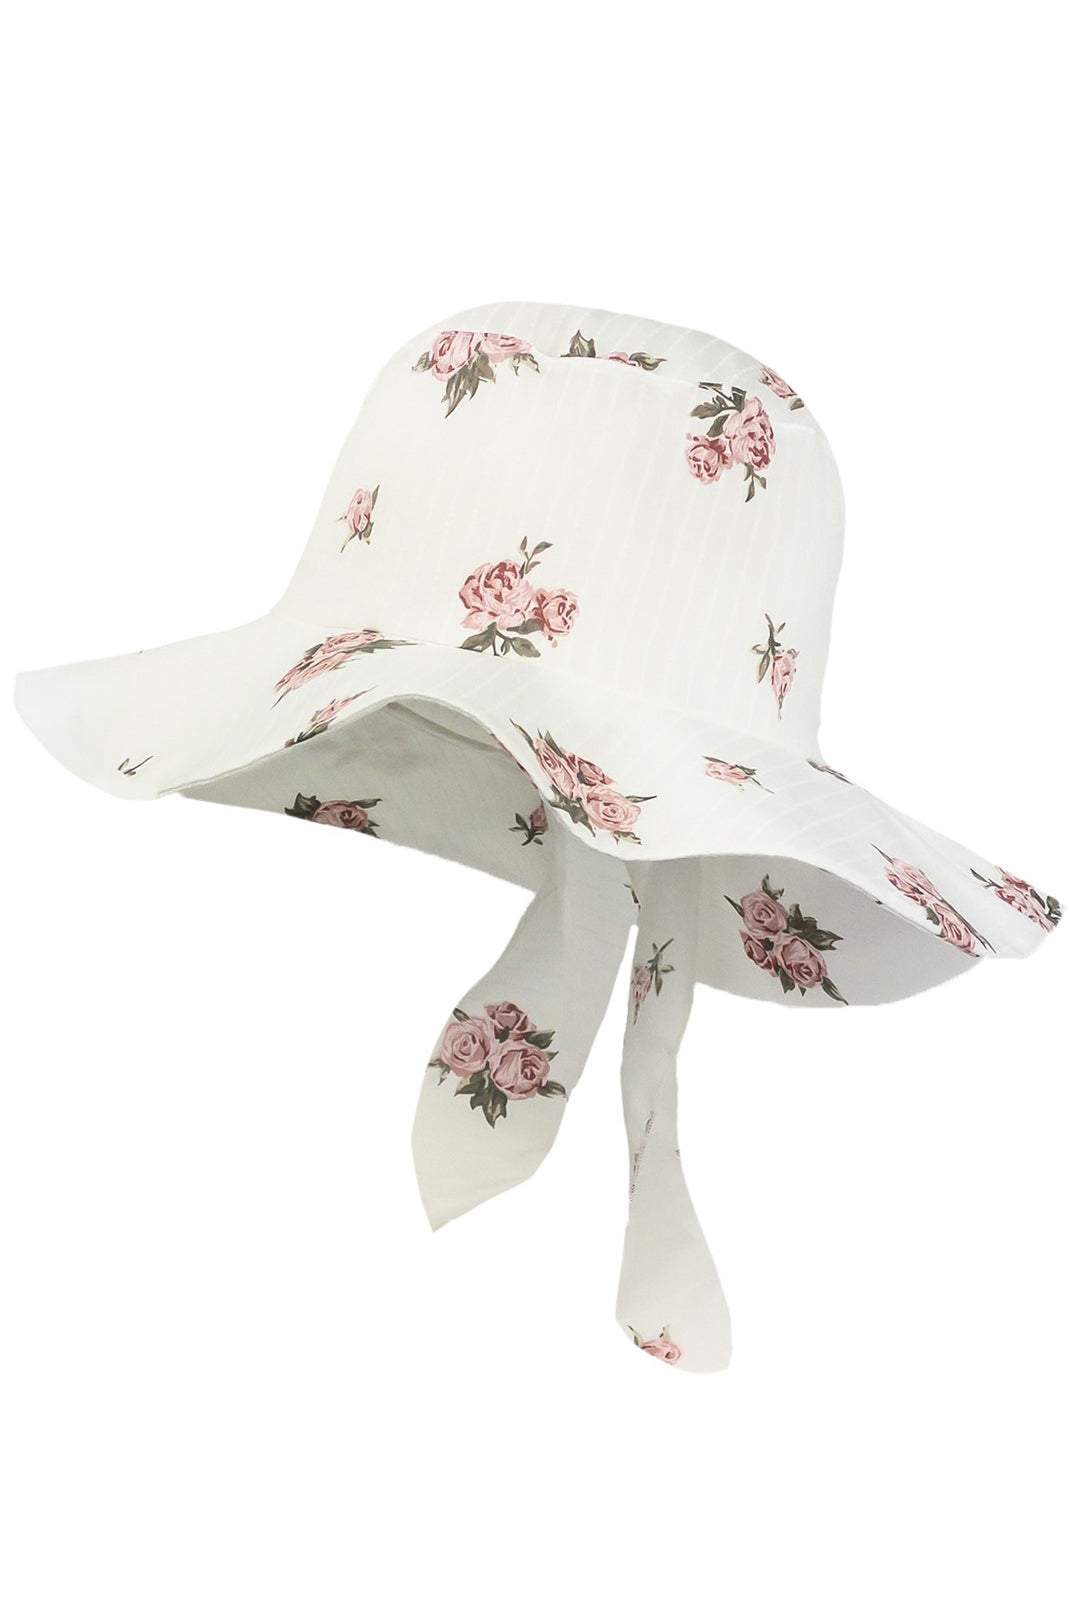 Jamiks "Pernille" Ivory & Pink Vintage Floral Sun Hat | Millie and John